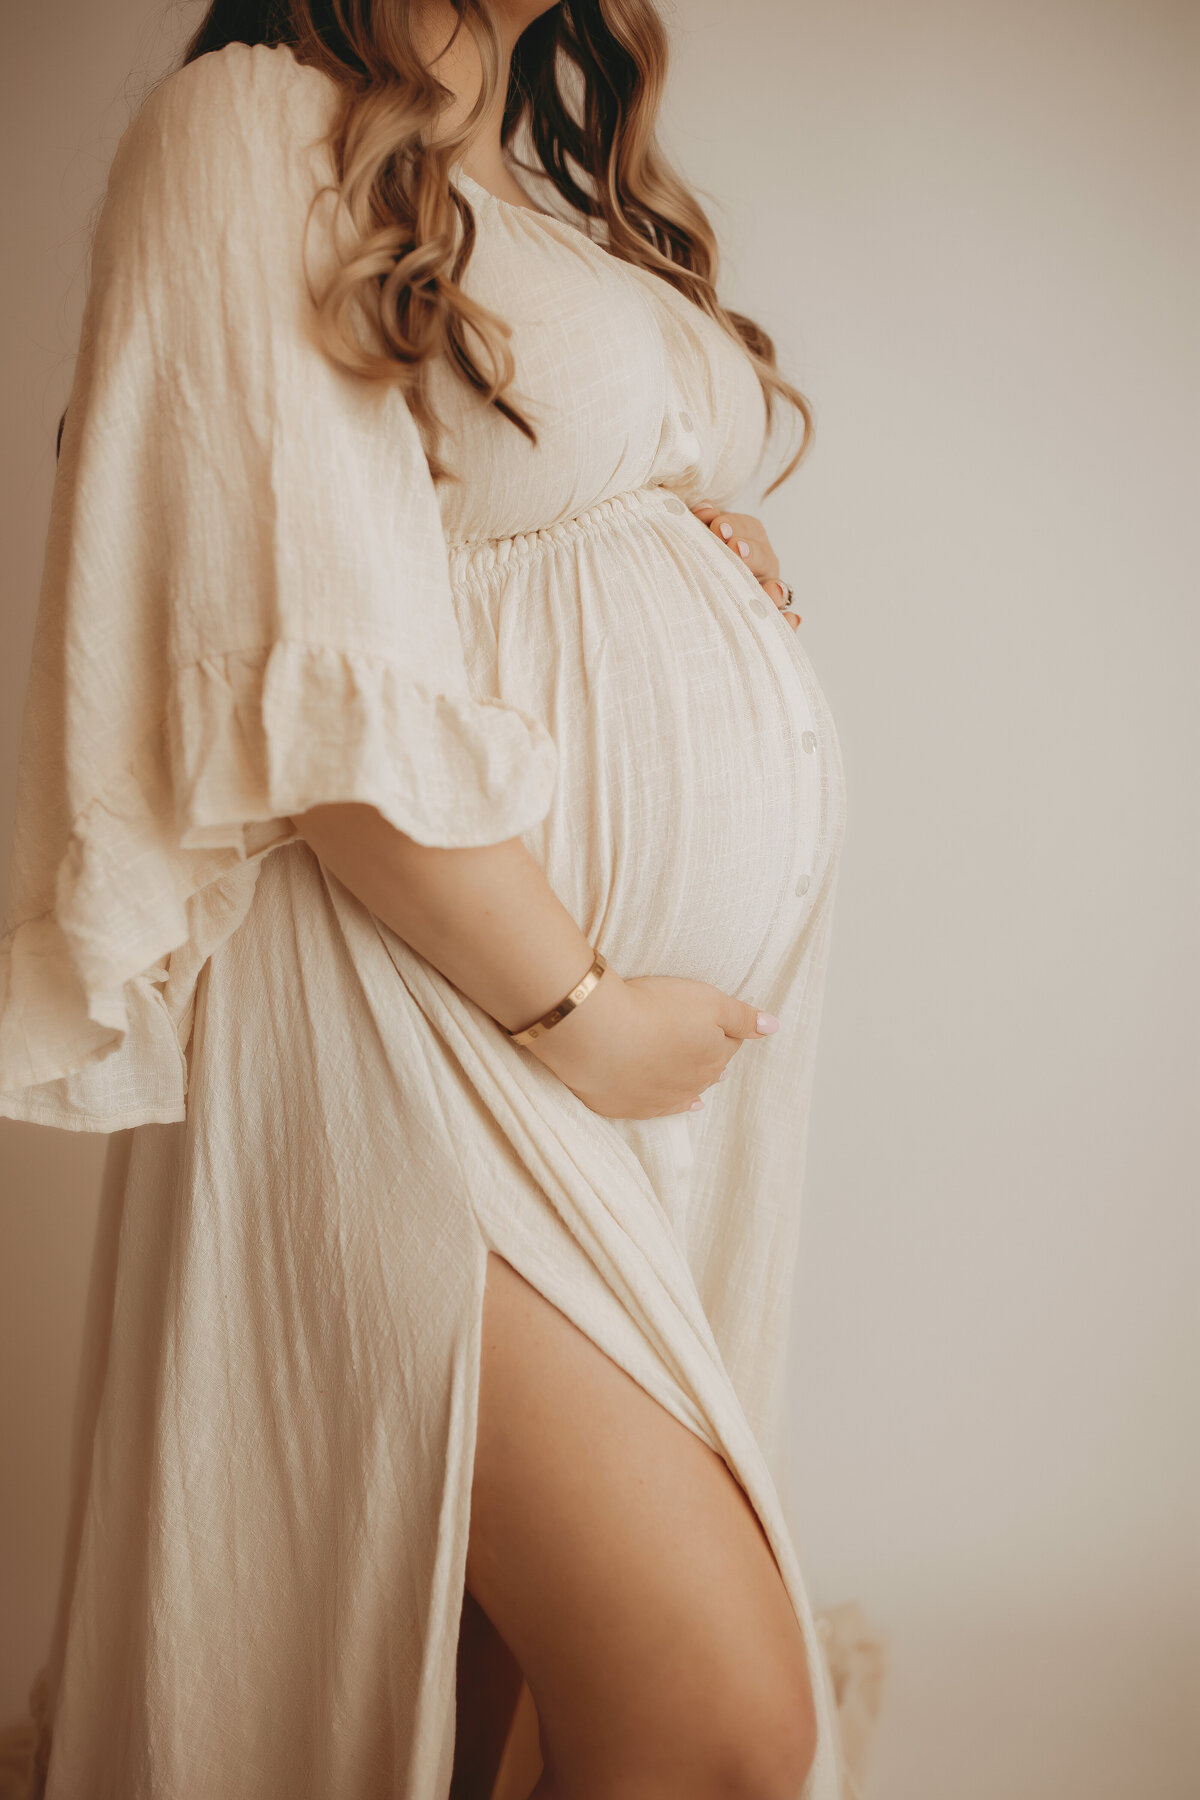 maternity photography memphis tn-4